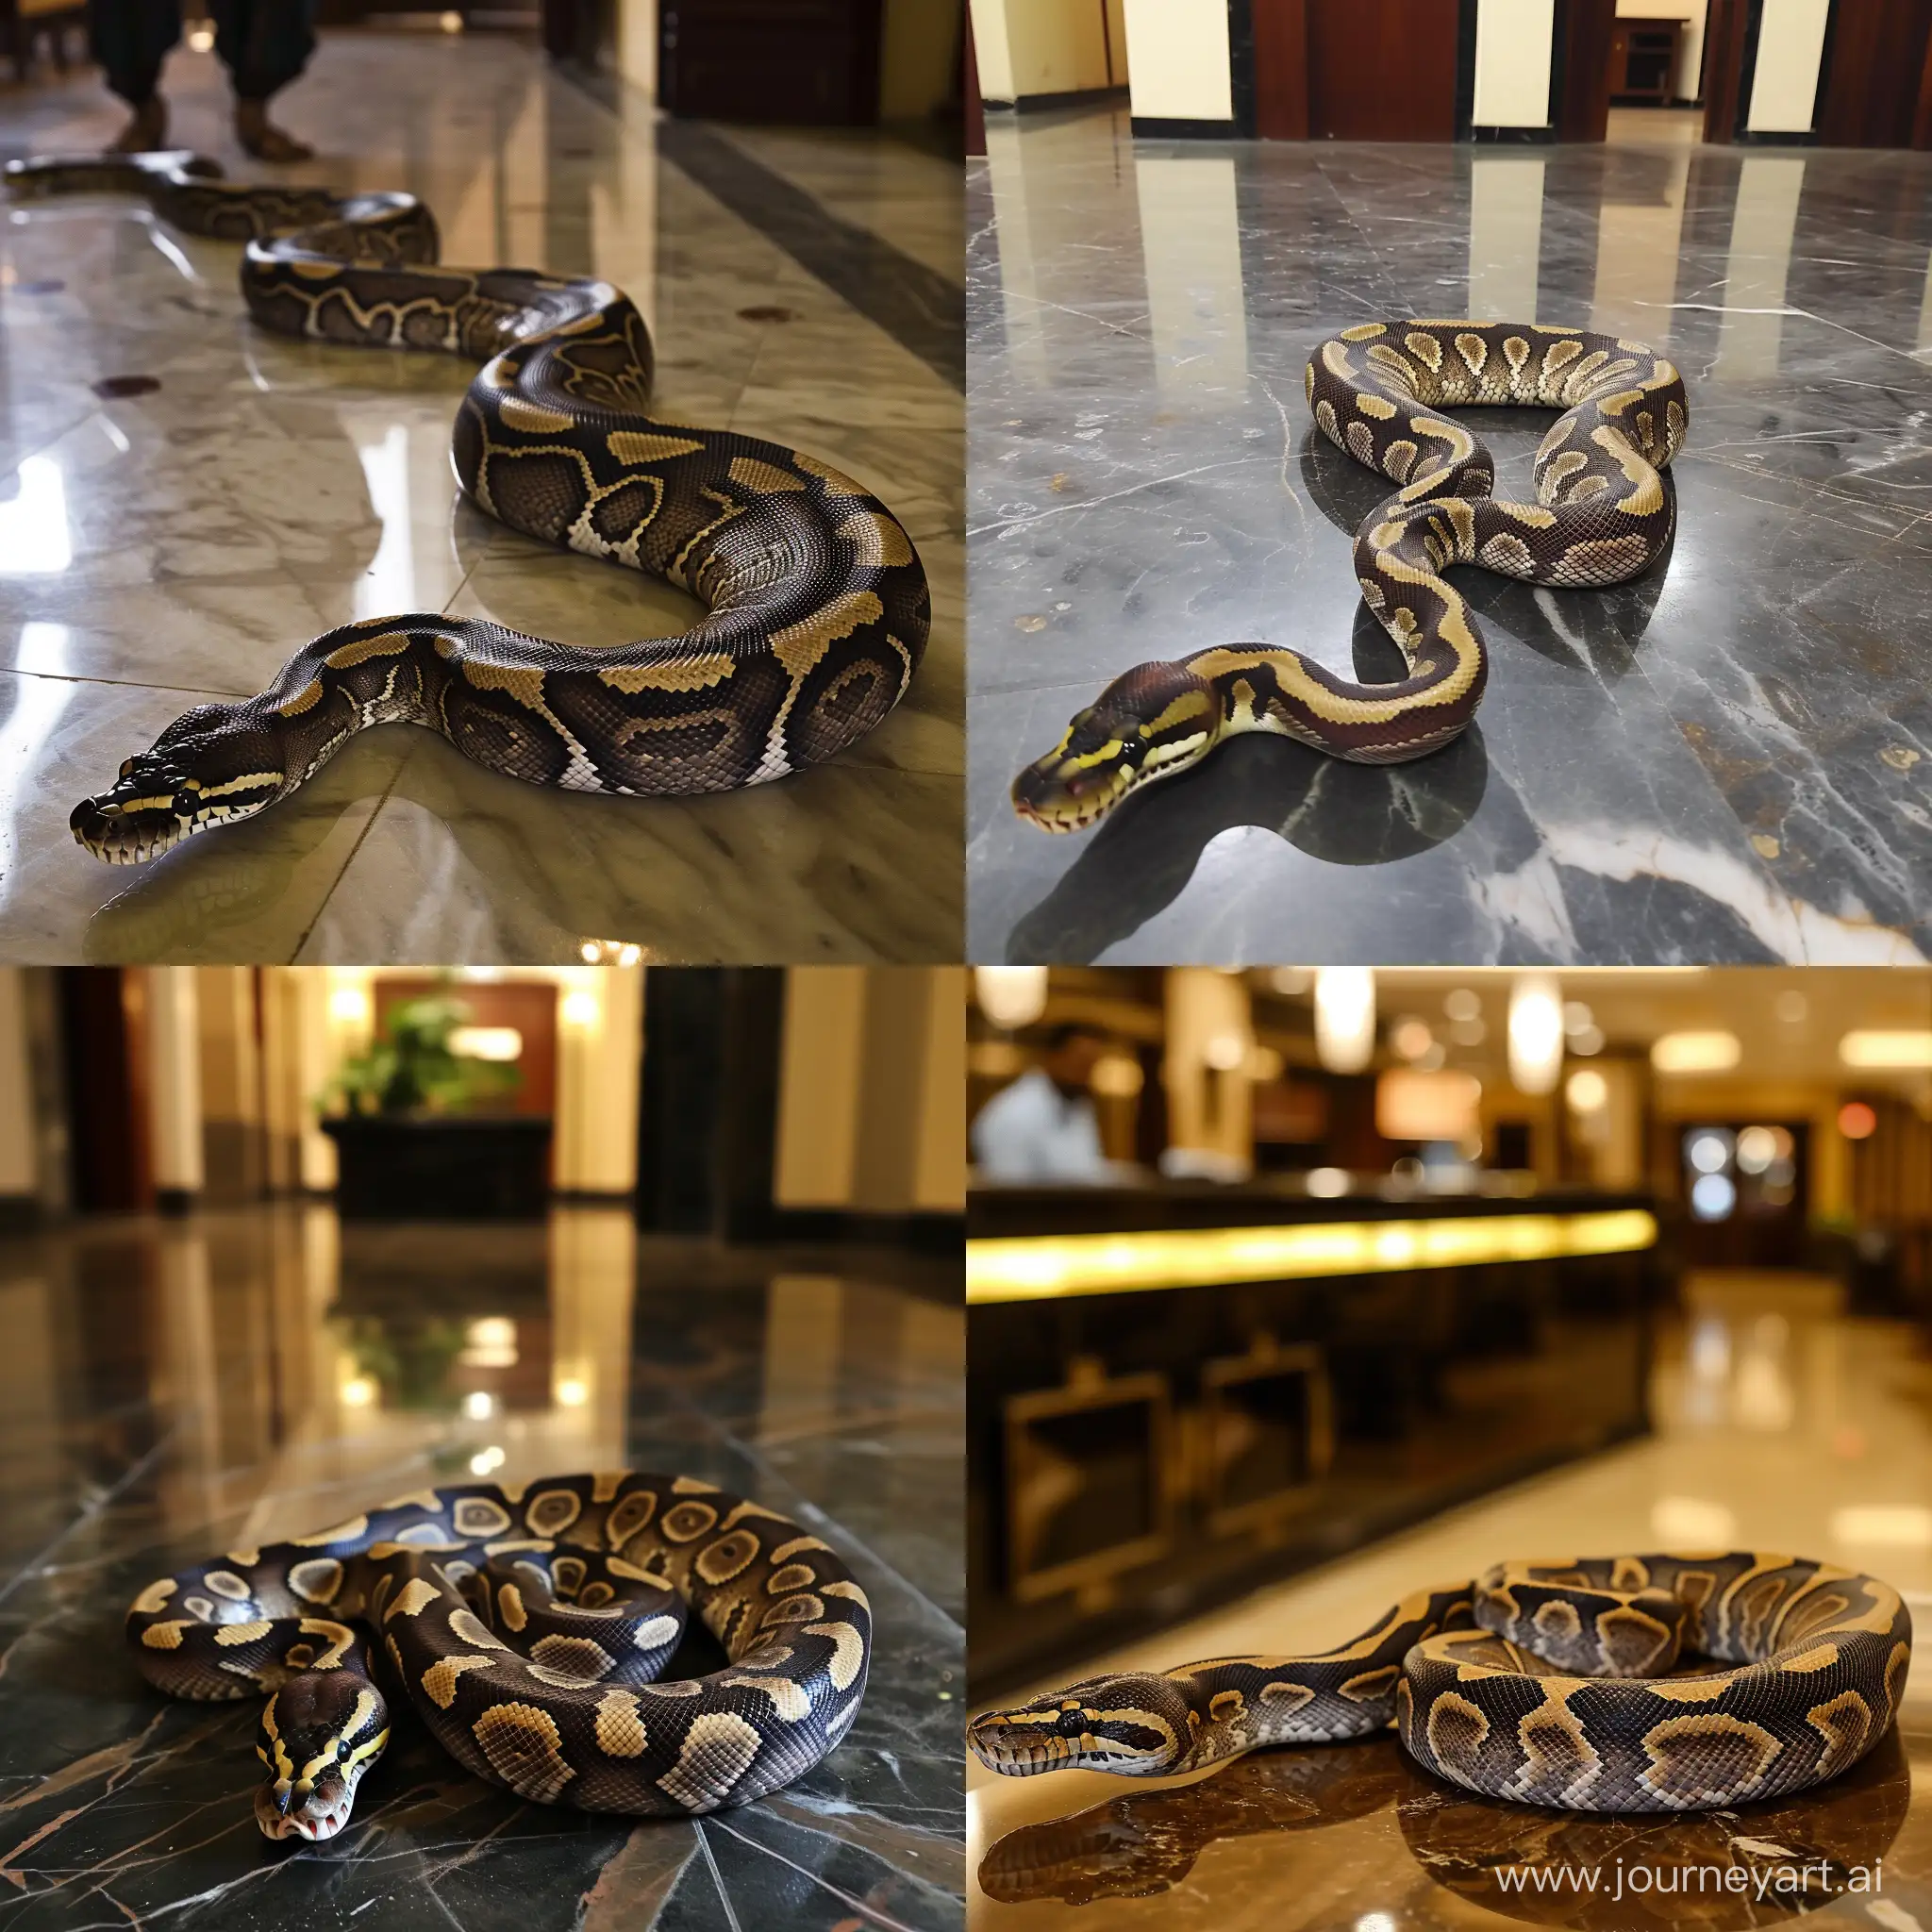 Reticulated-Python-Encountered-in-Mumbai-Hotel